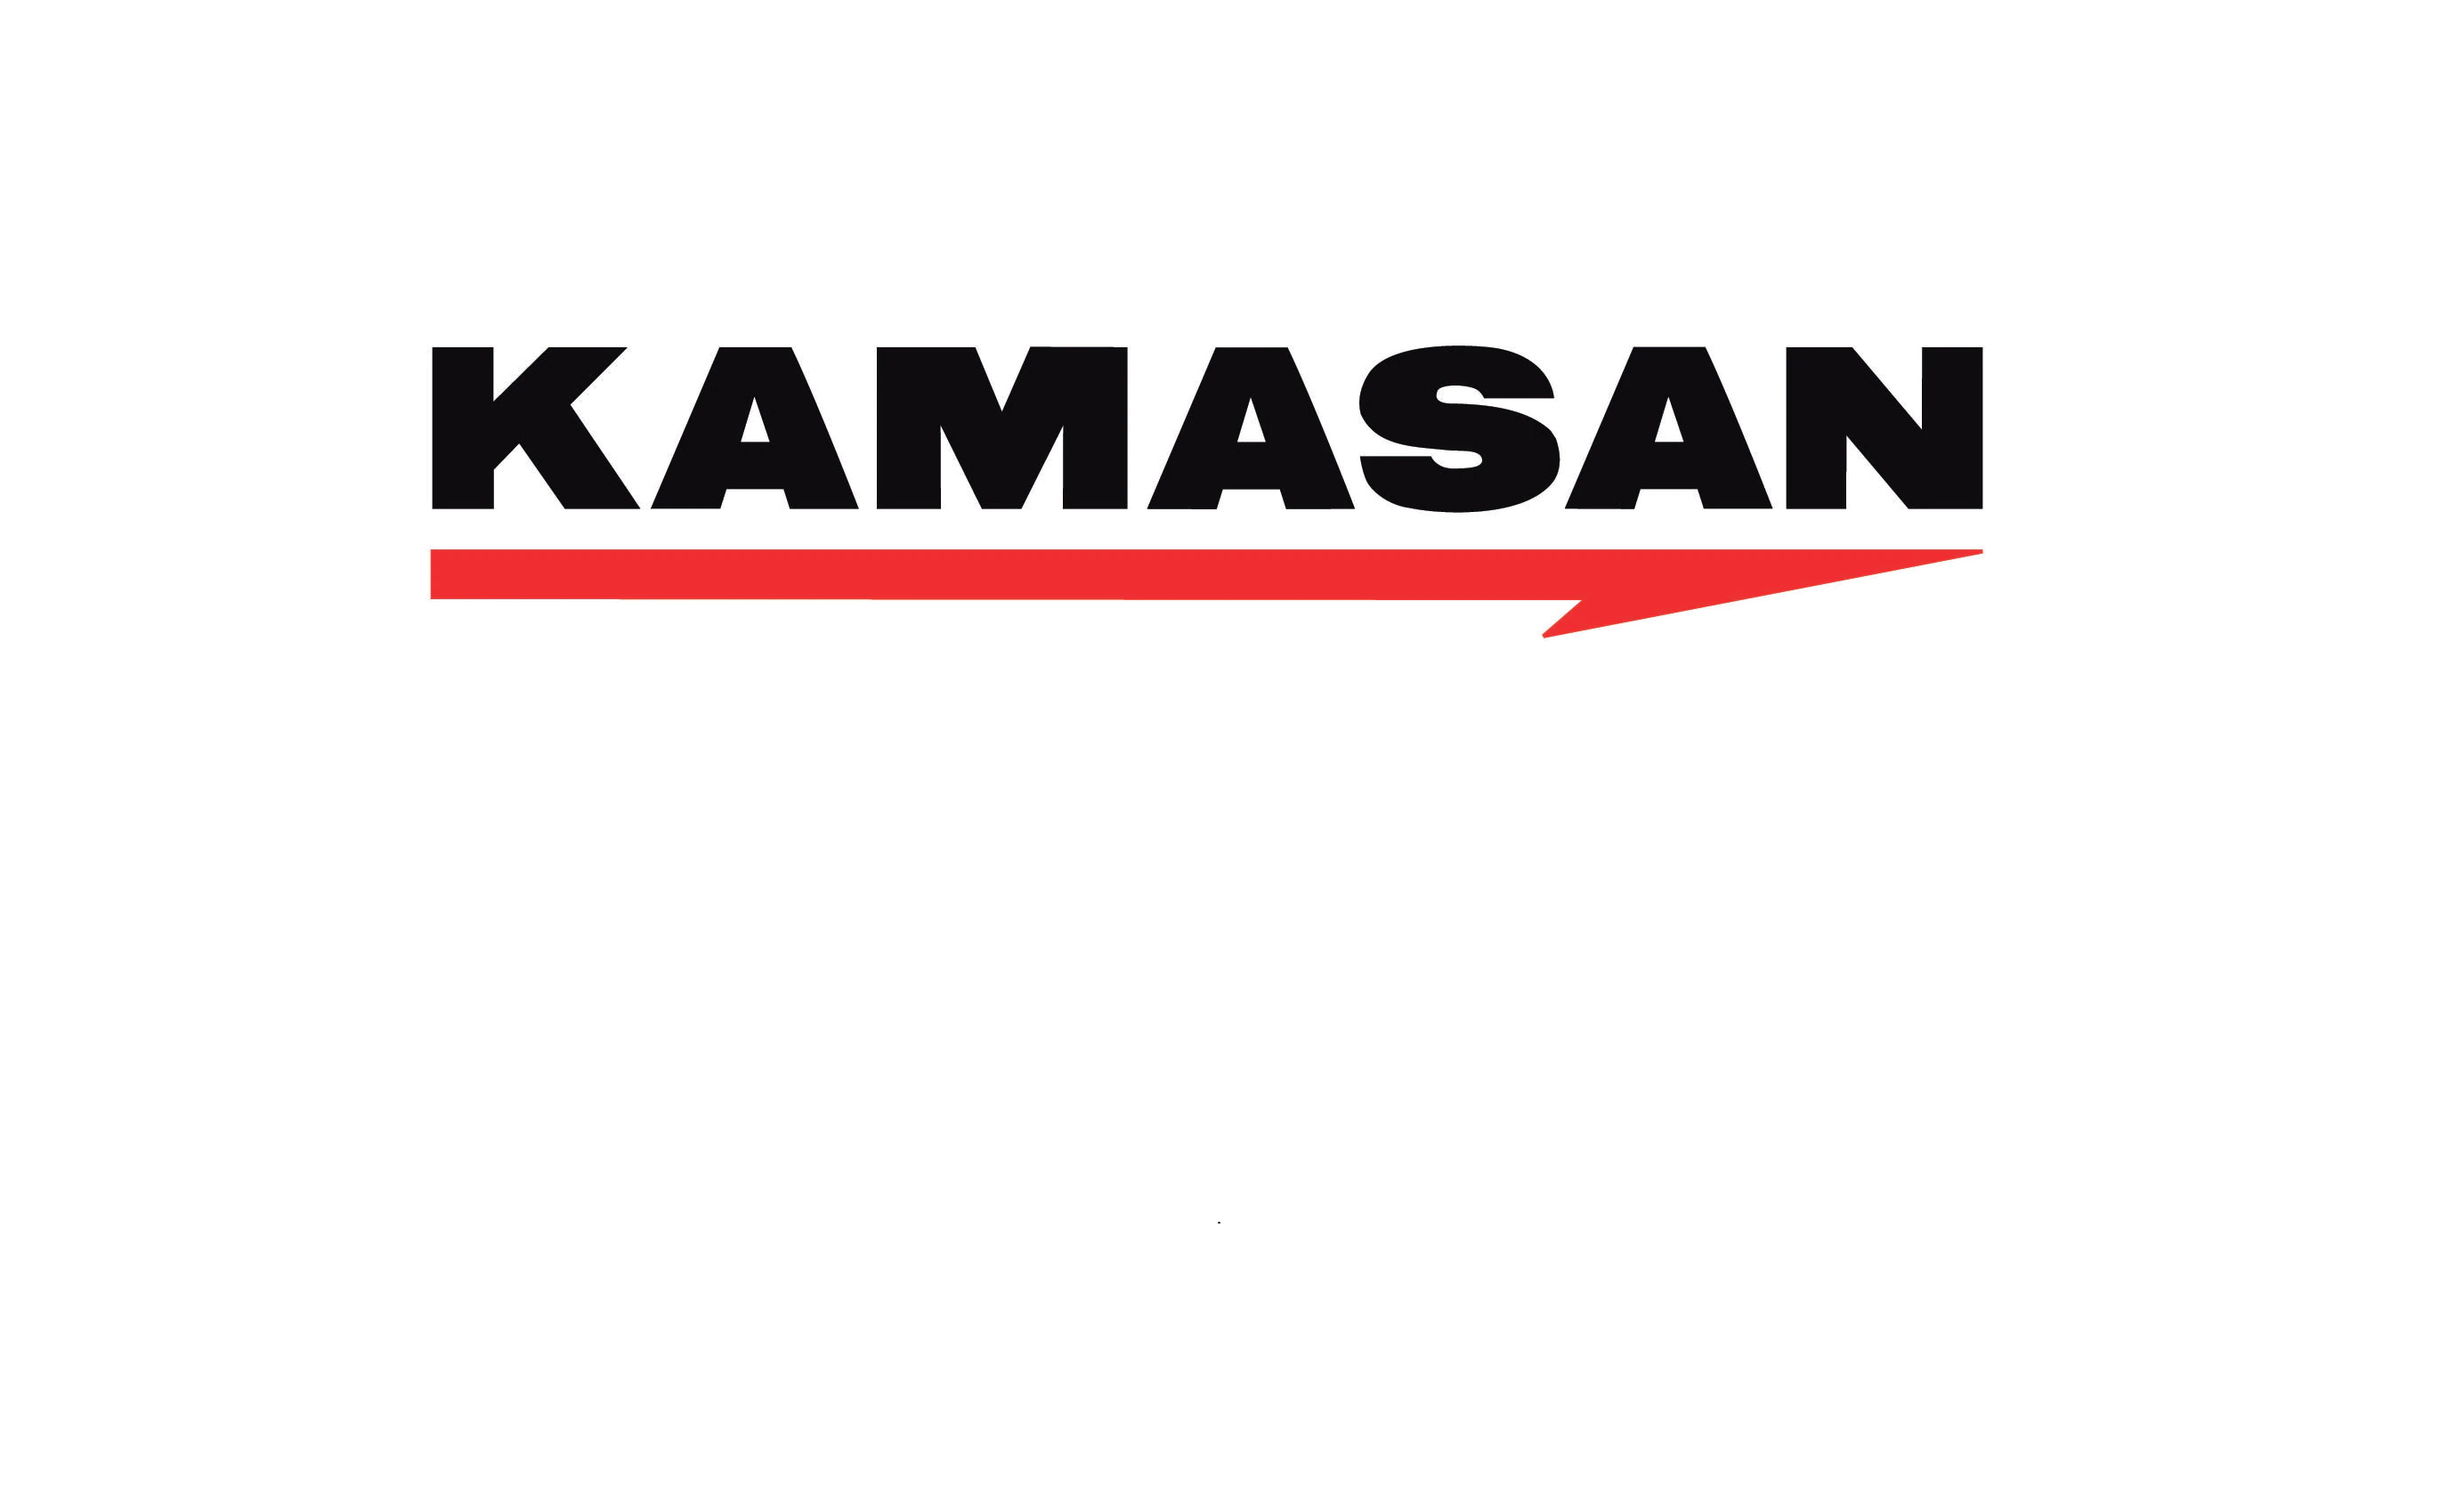 Kamasan-Logo-Team-England-Supporter